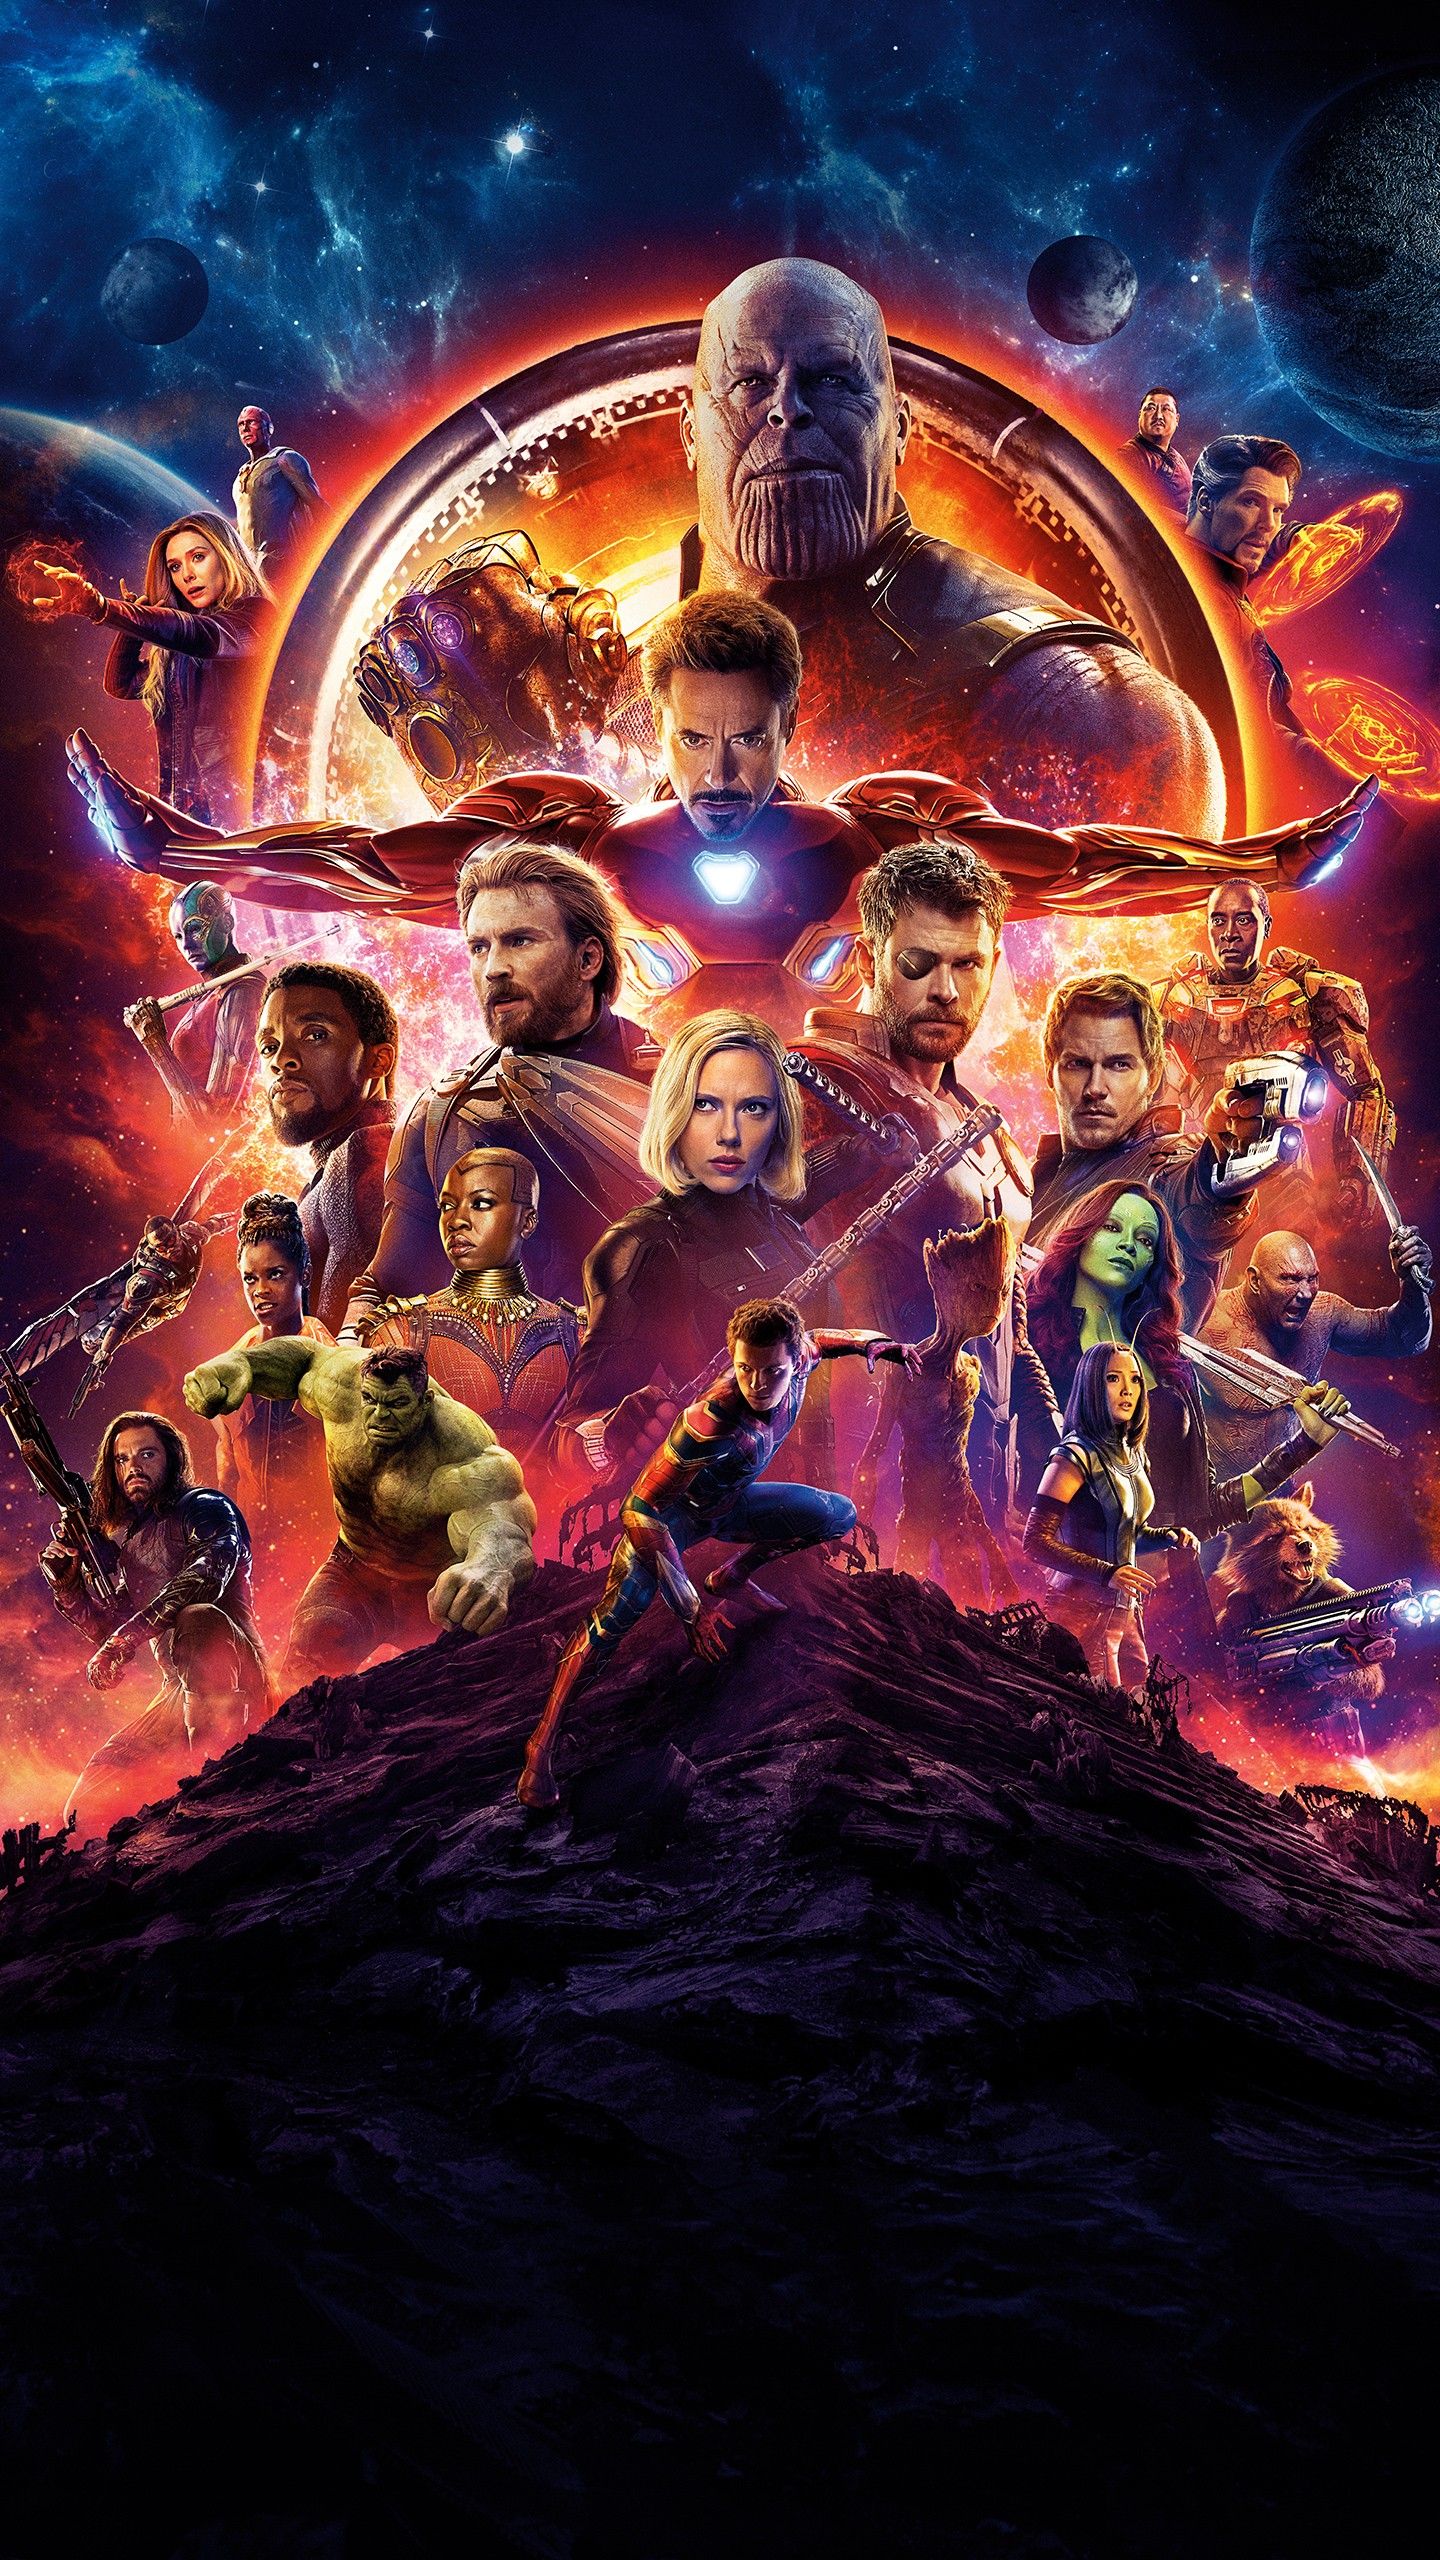 Avengers Infinity War 4K 8K Fondos de pantalla | HD Wallpapers | ID # 23378